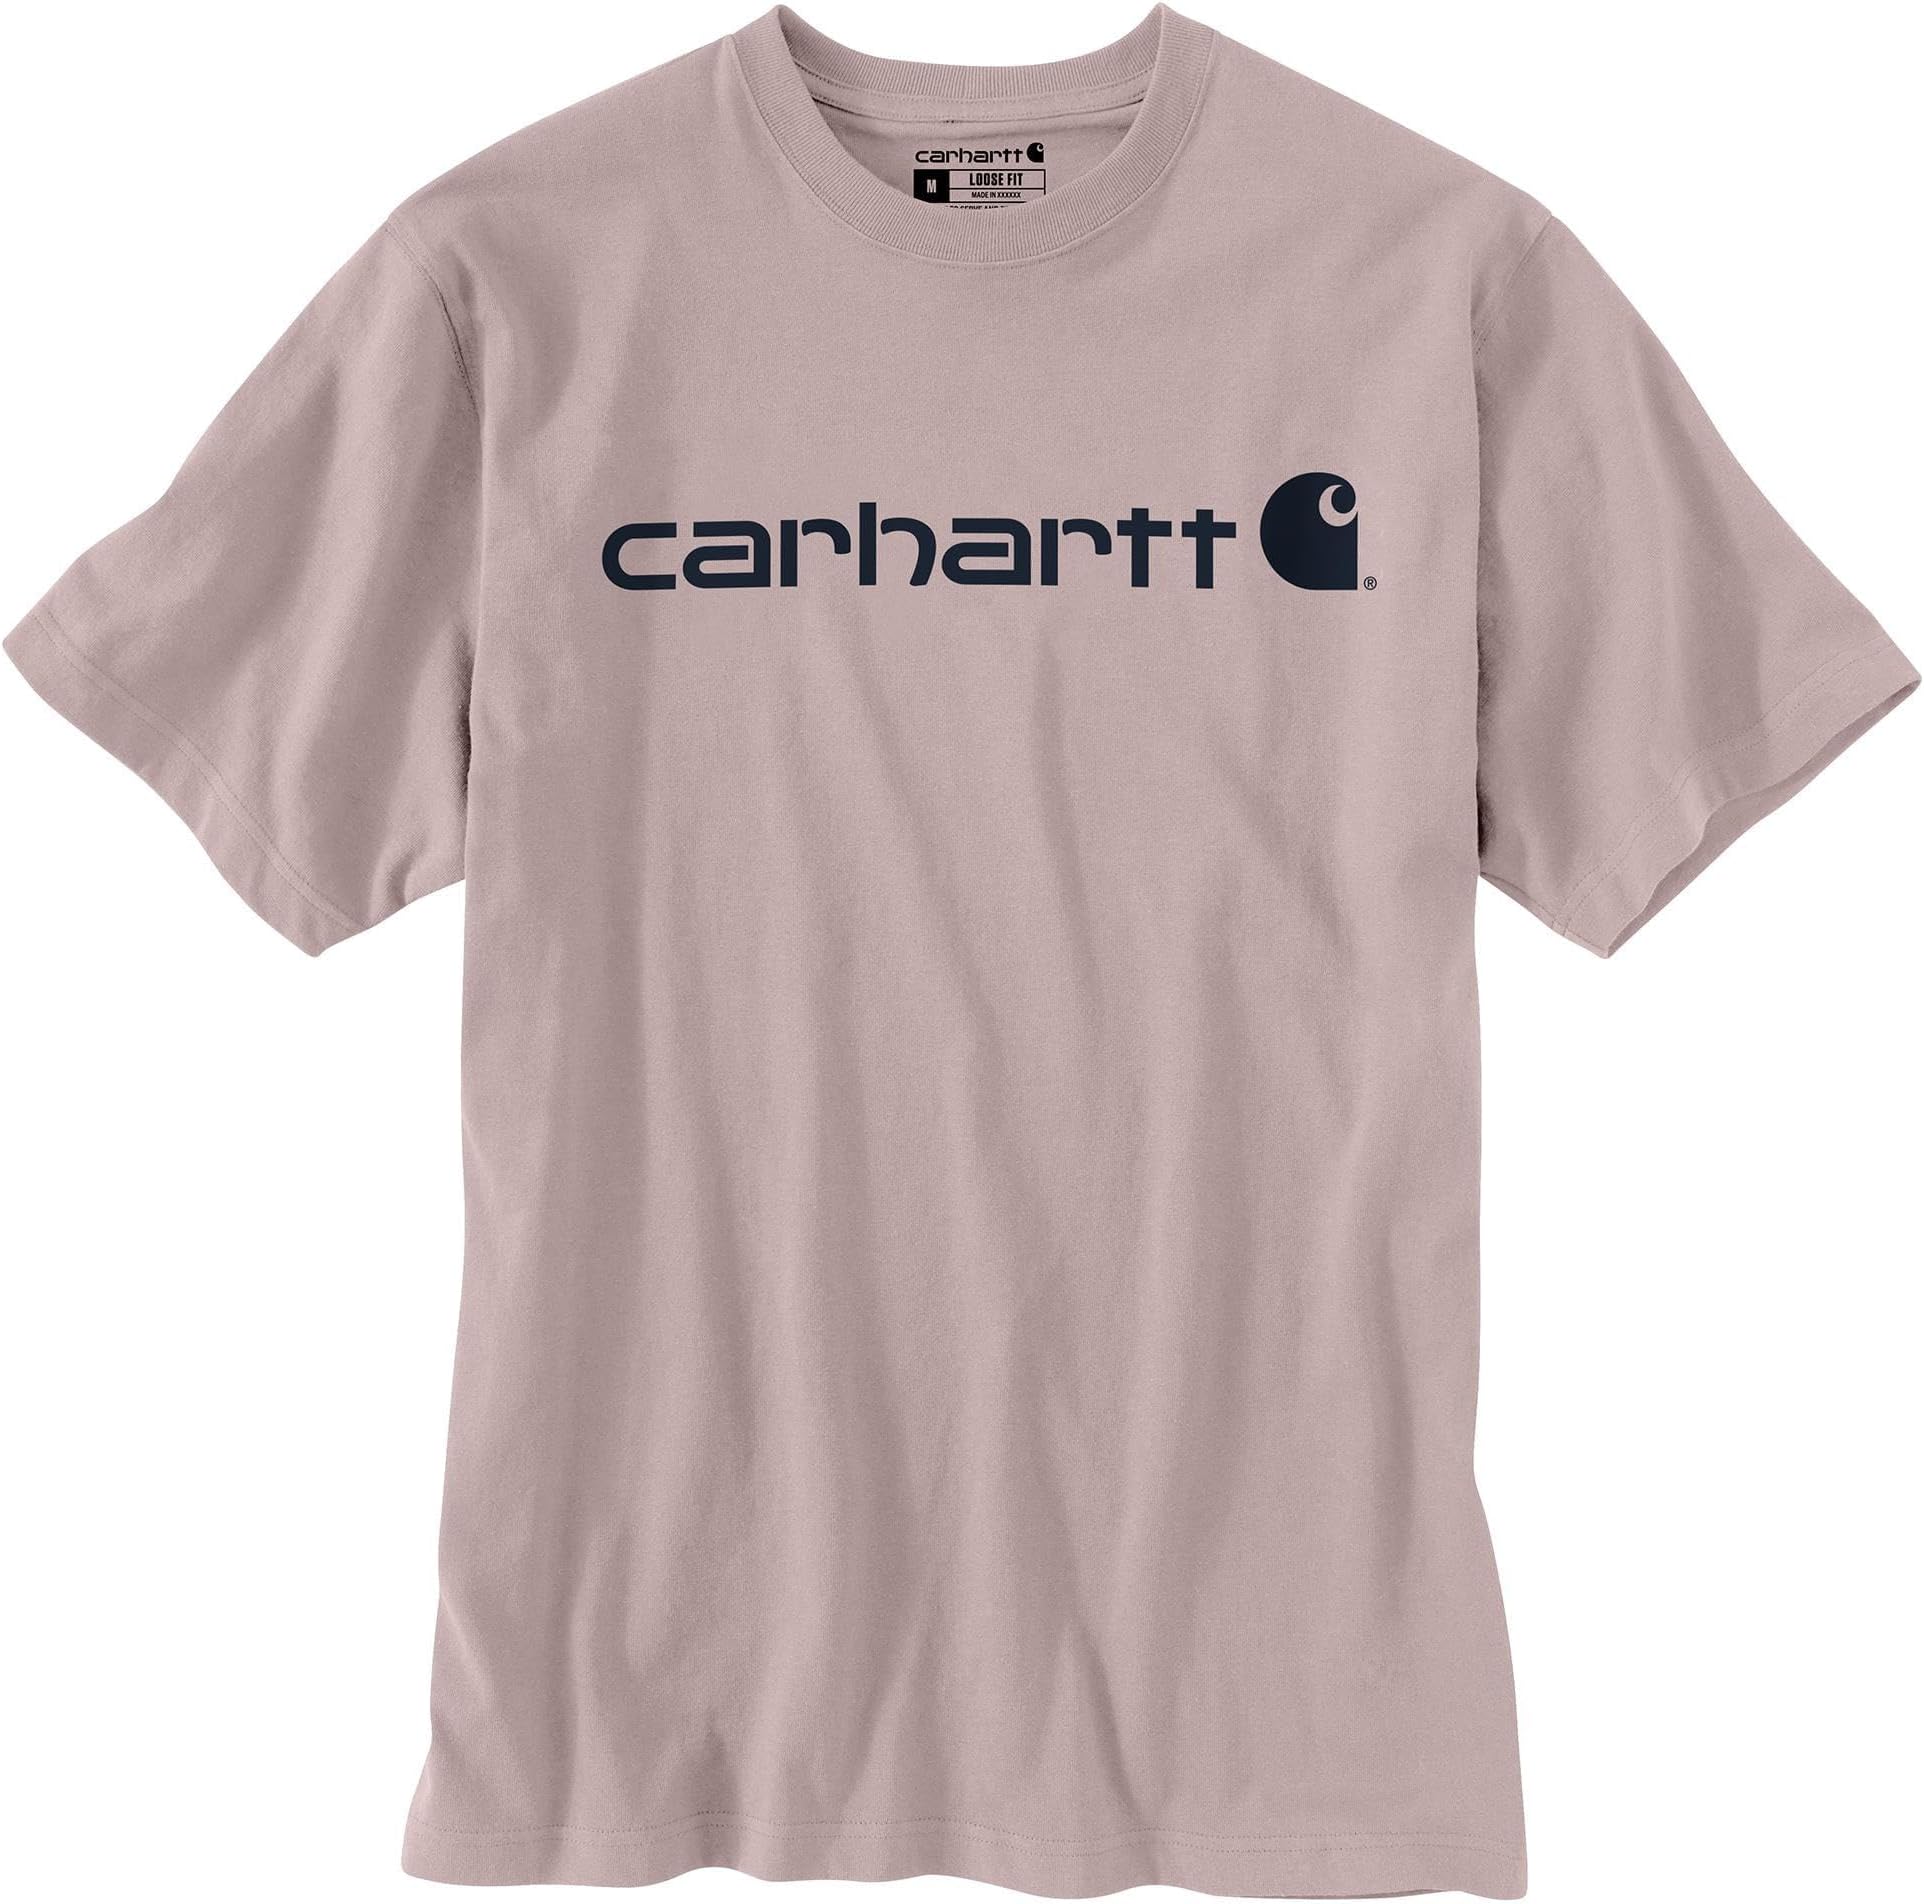 Футболка с фирменным логотипом (S/S) Carhartt, цвет Mink футболка с фирменным логотипом s s carhartt цвет marmalade heather